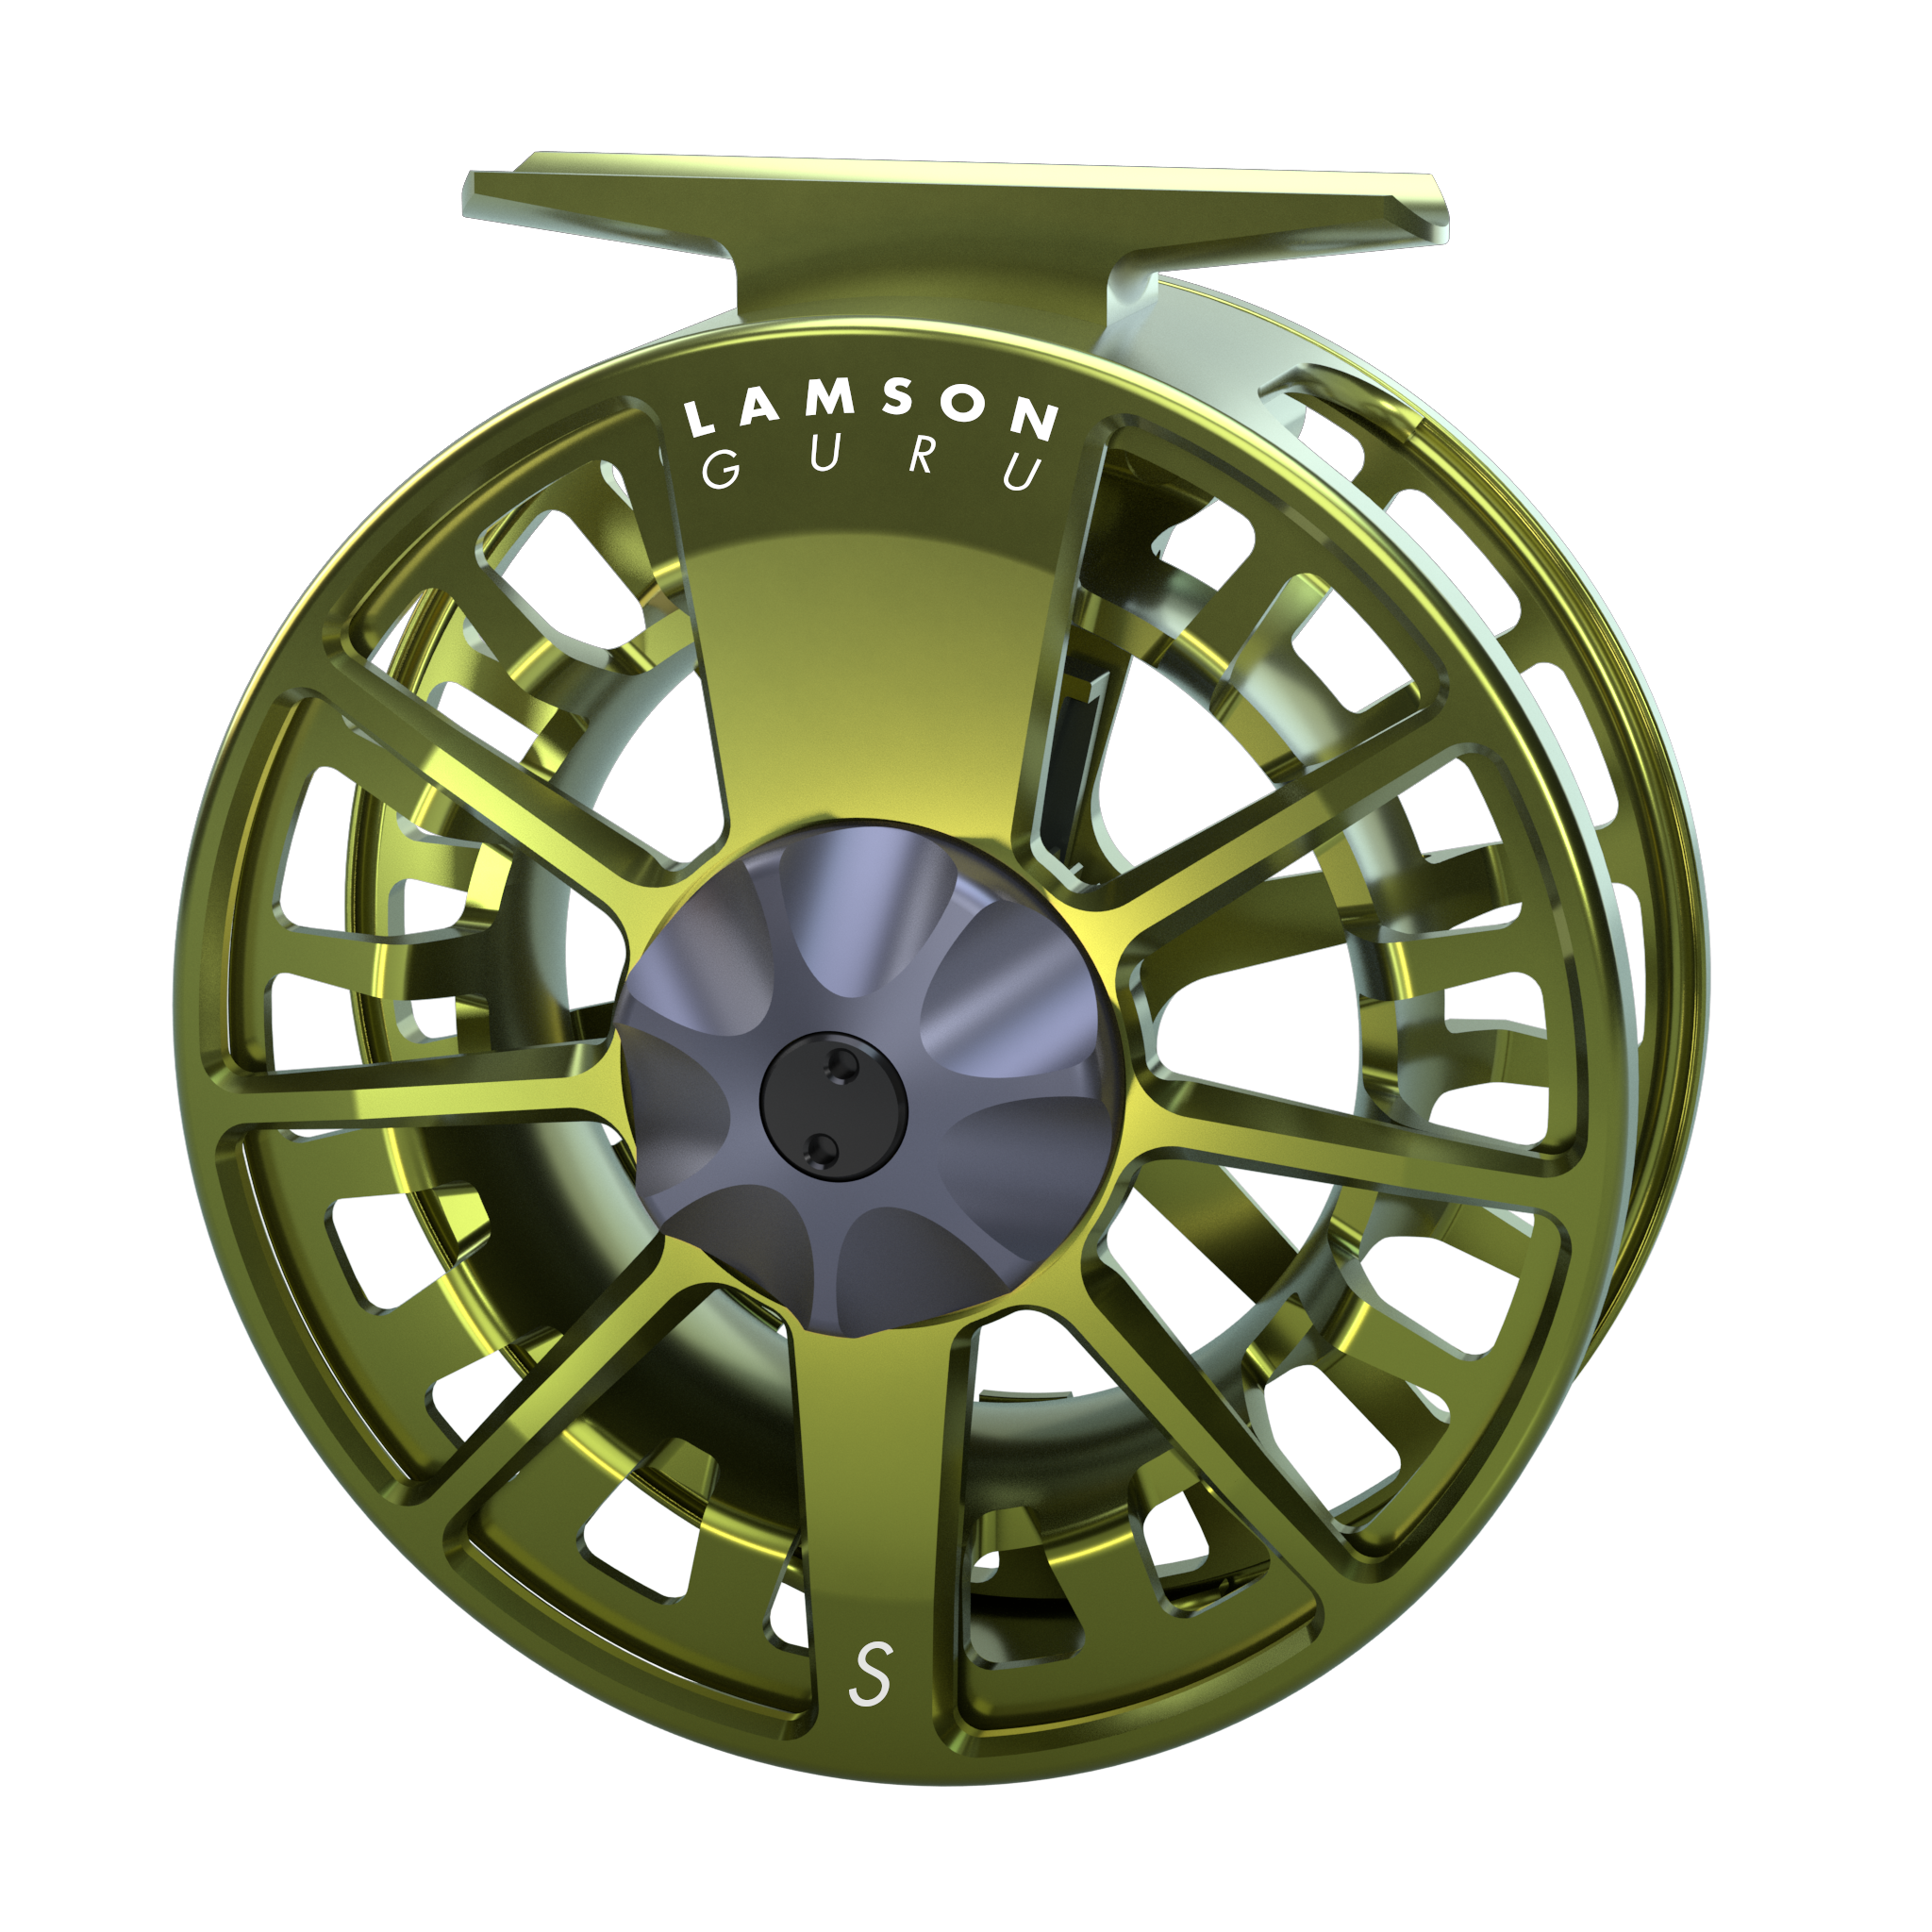 Lamson Liquid S-Series Reels